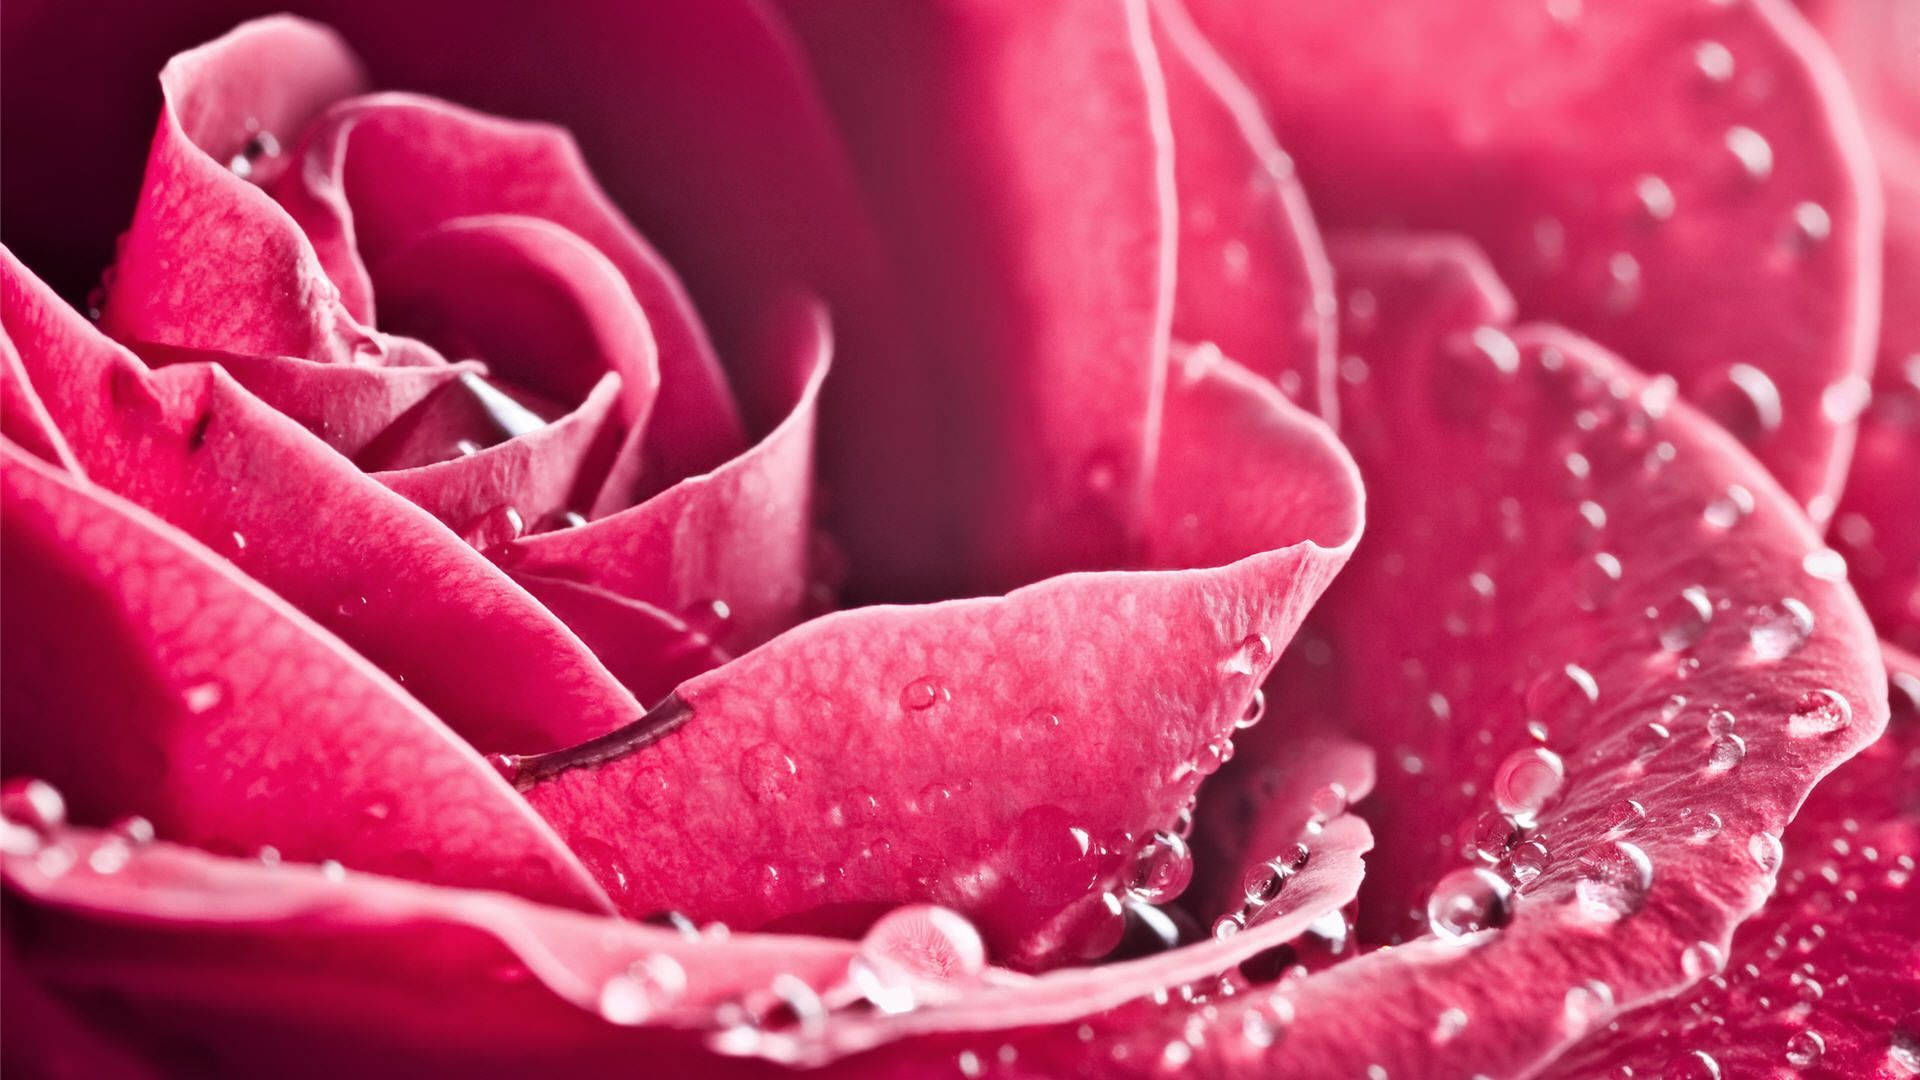 Vibrant Hot Pink Rose Bathed In Droplets